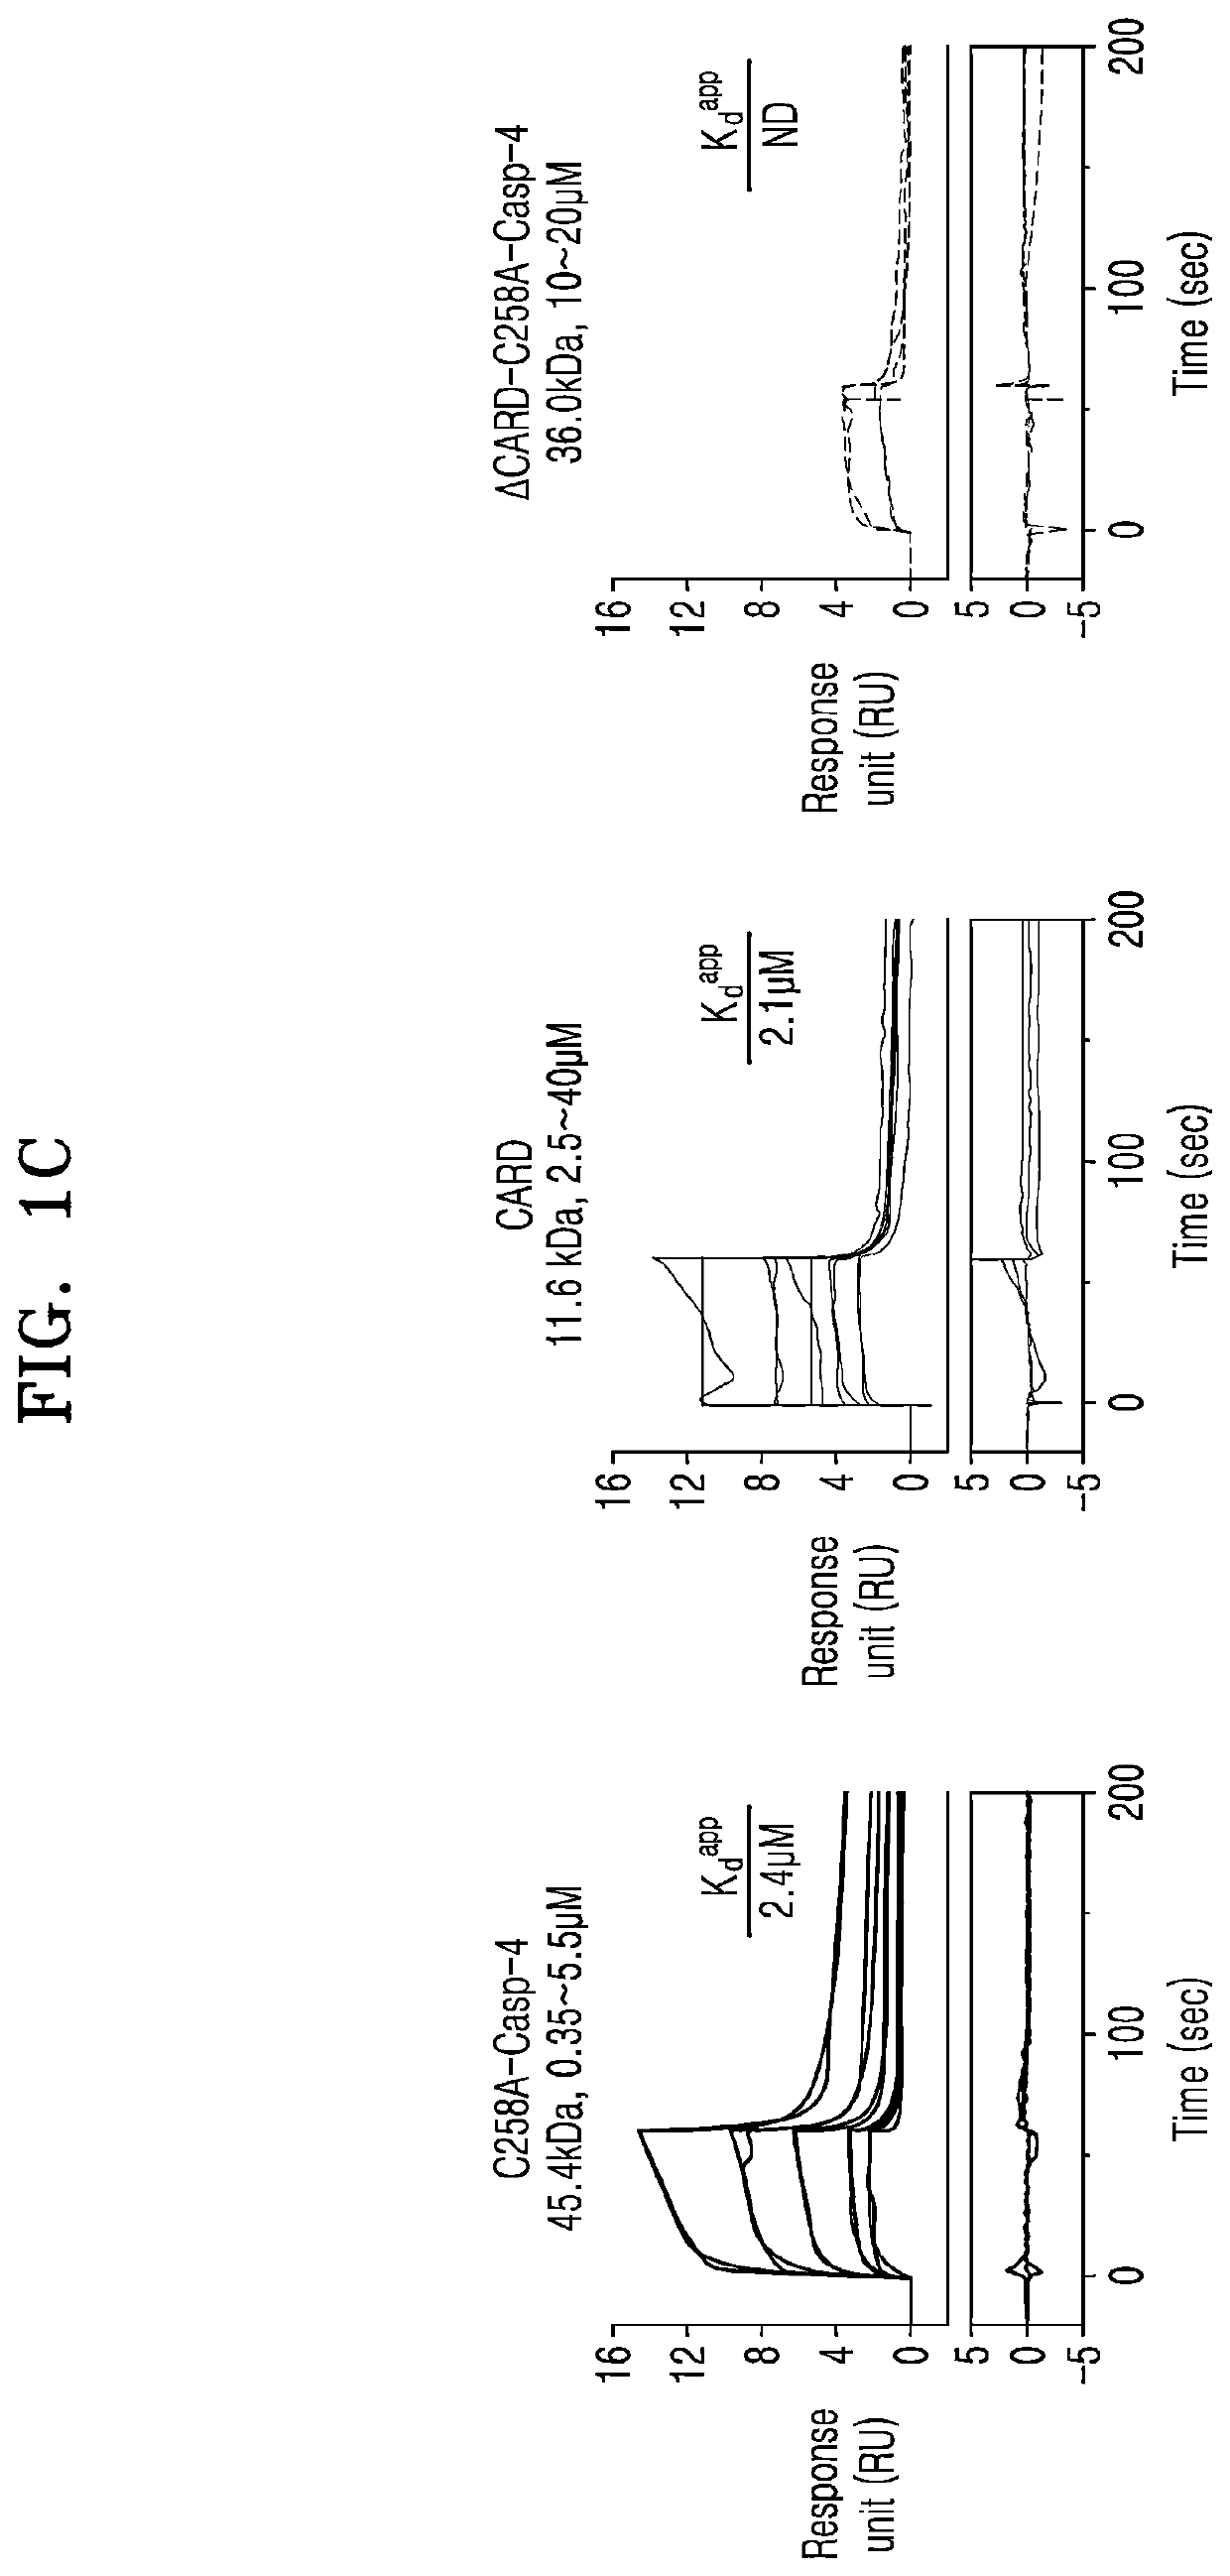 Method of screening inhibitor of caspase activity by lipopolysaccharide